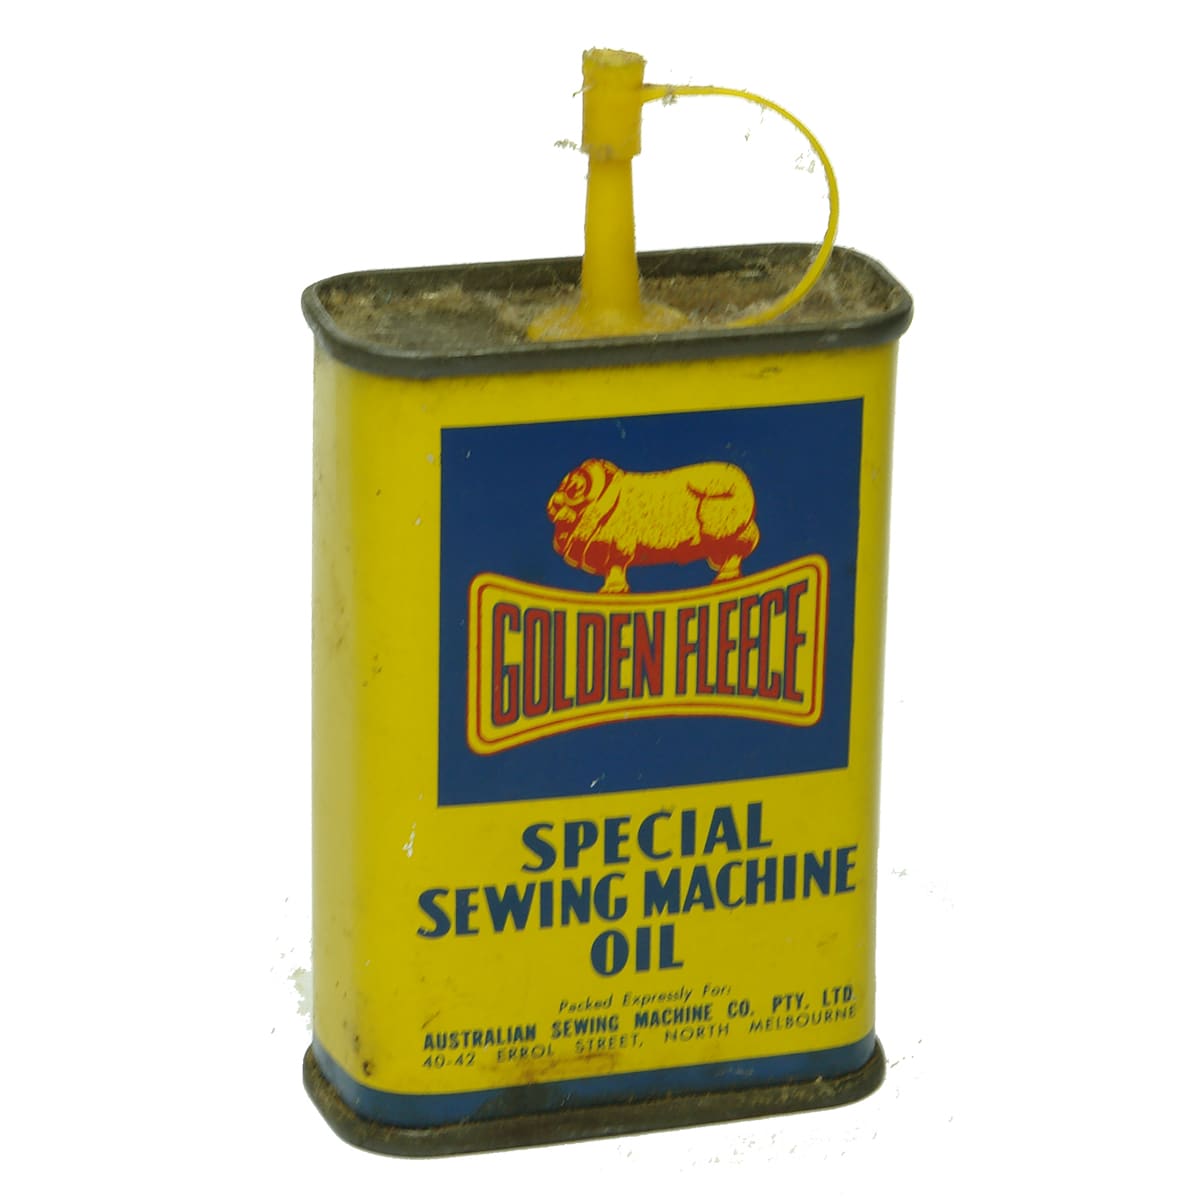 Garagenalia. Golden Fleece Special Sewing Machine Oil Tin, Ward Bros. Sewing Machines, North Melbourne. 4 oz. (Victoria)